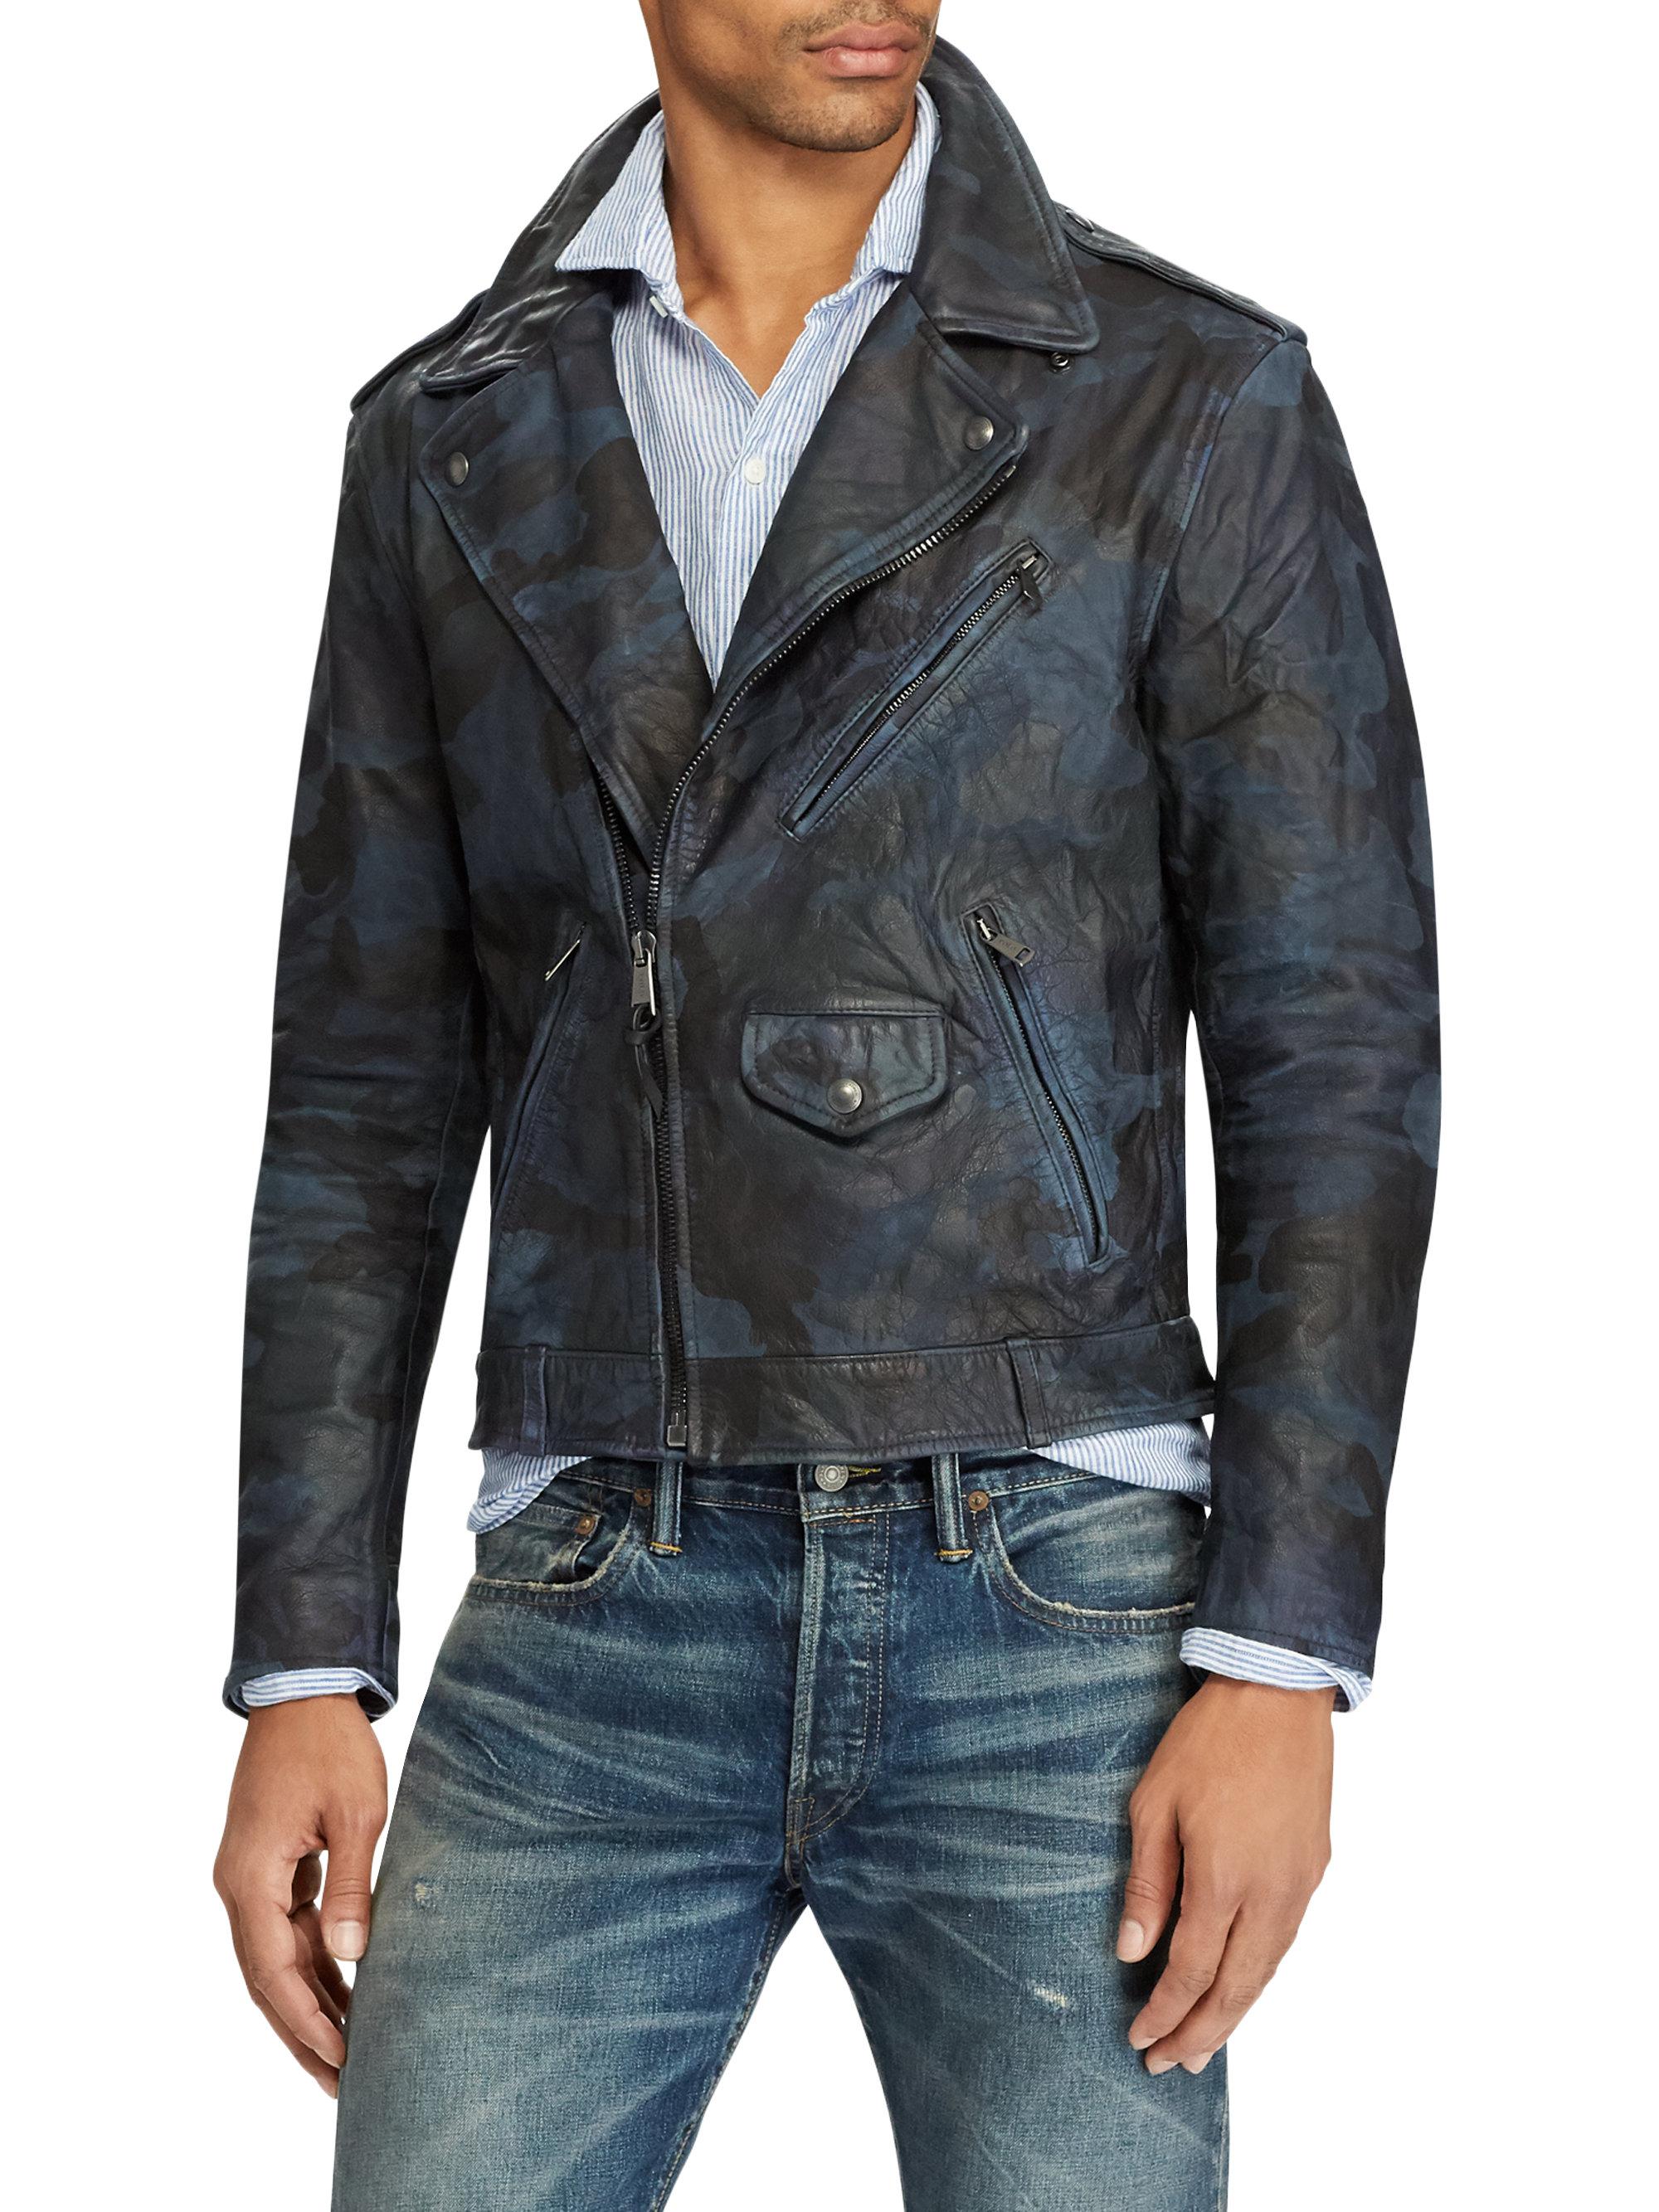 ralph lauren blue leather jacket